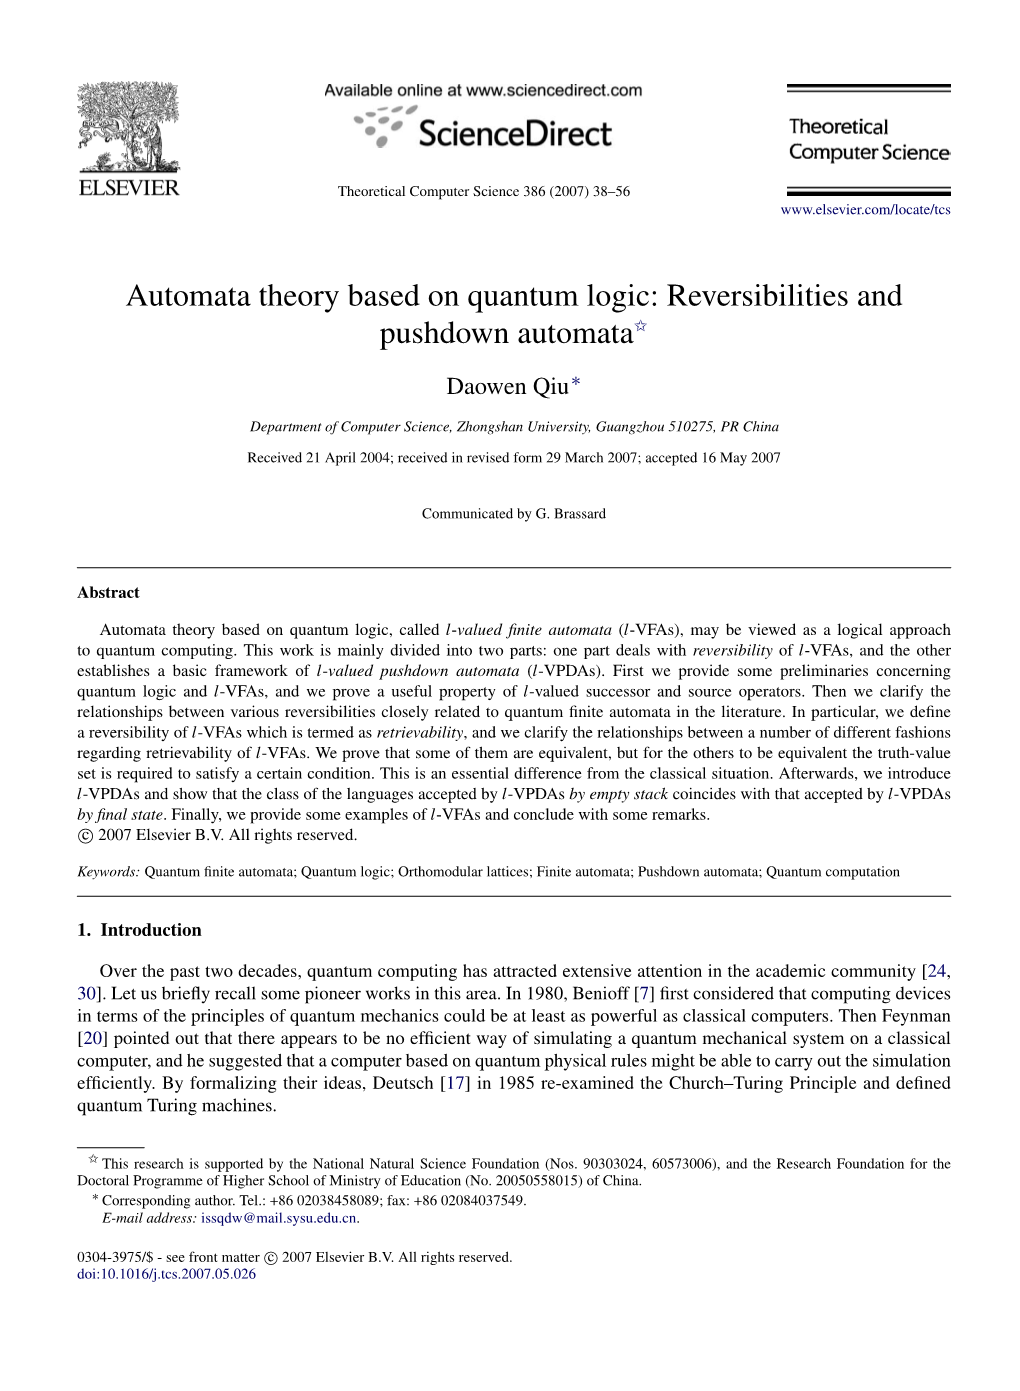 Automata Theory Based on Quantum Logic: Reversibilities and Pushdown Automata$